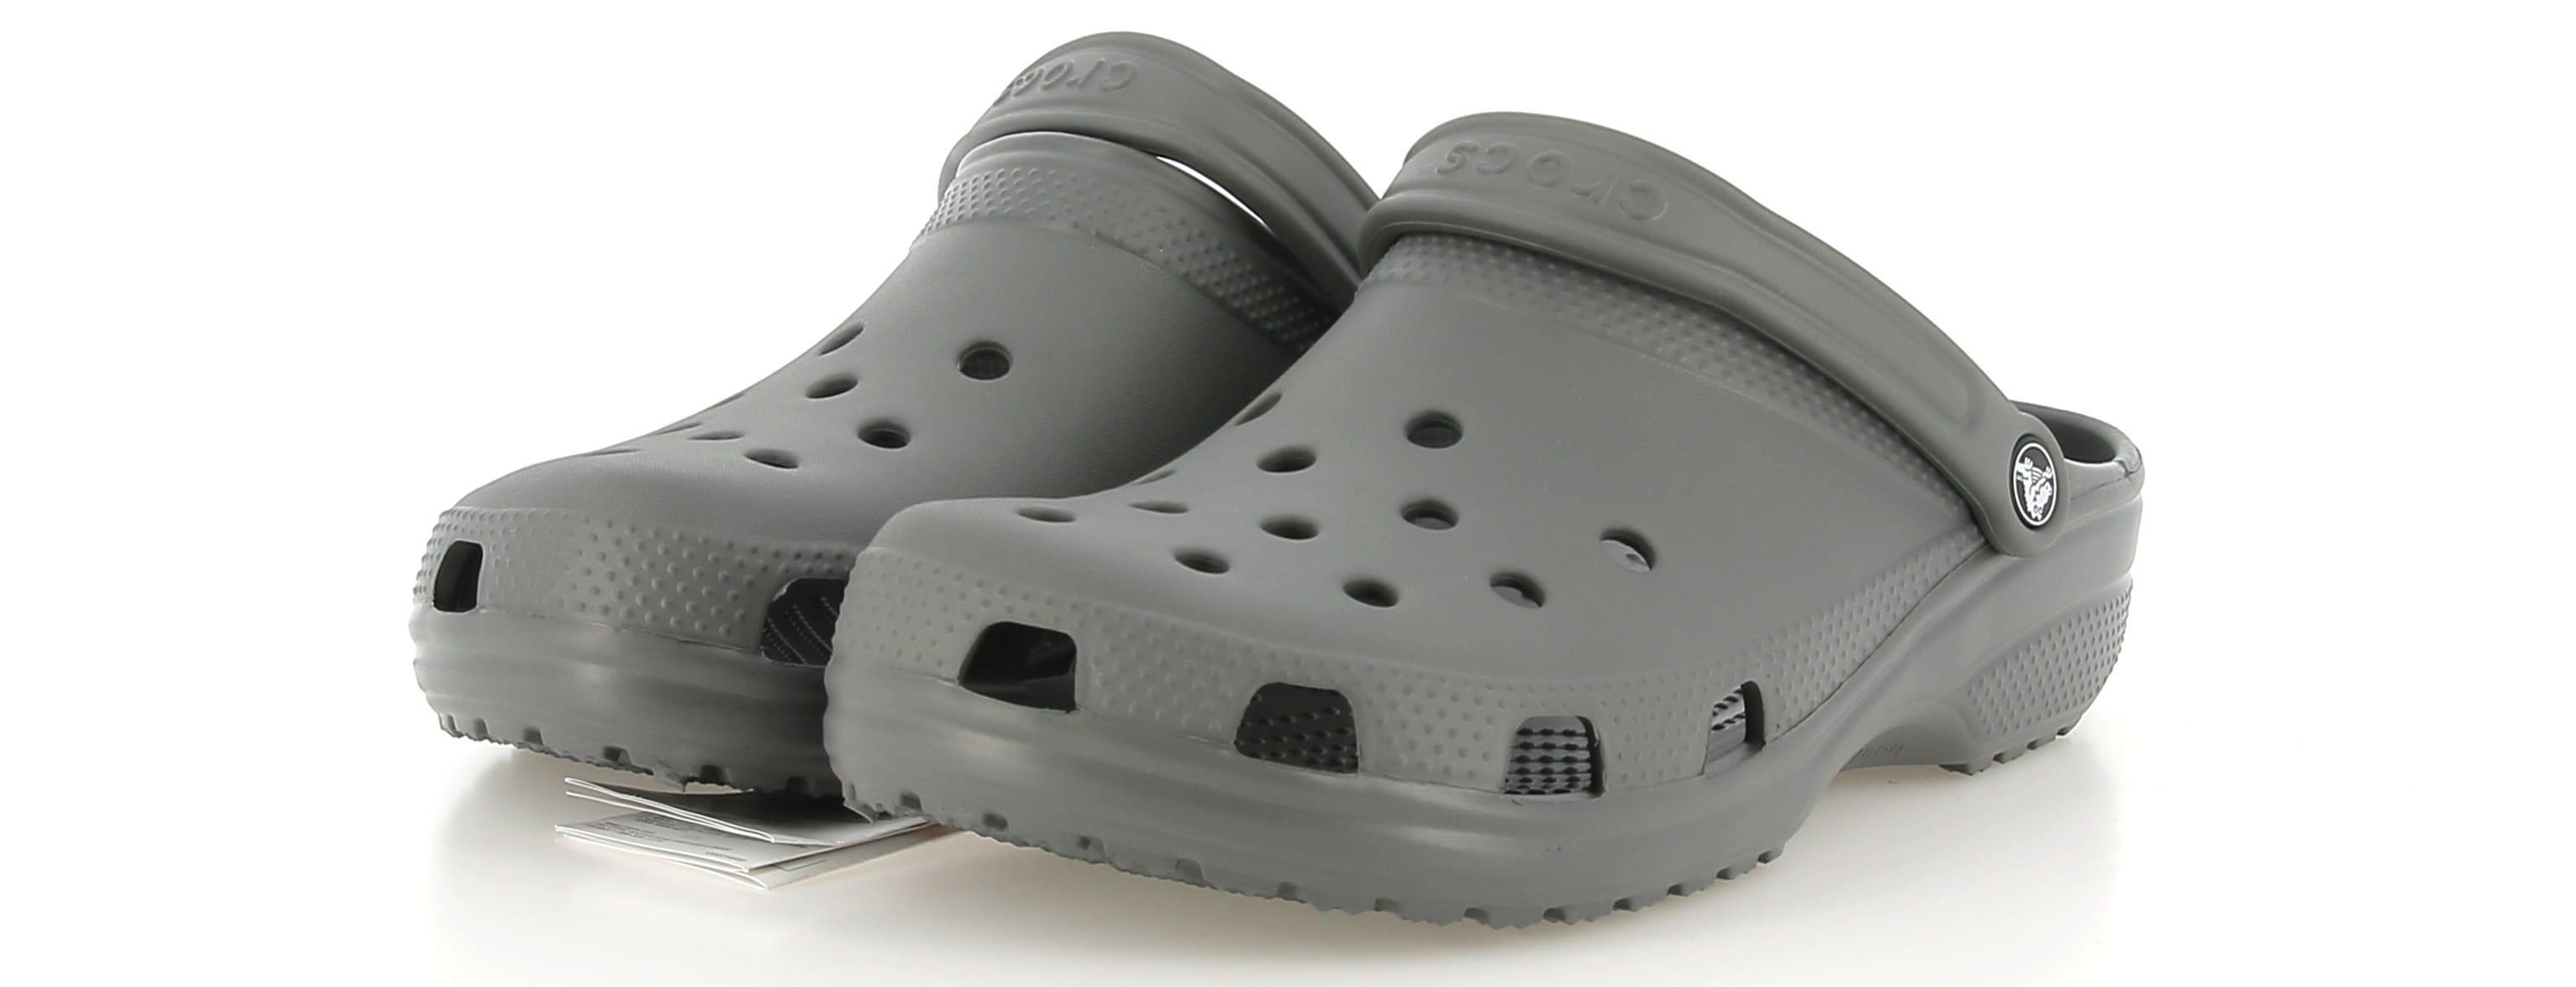 crocs ciabatte crocs classic clog sabot 10001 unisex colore grigio